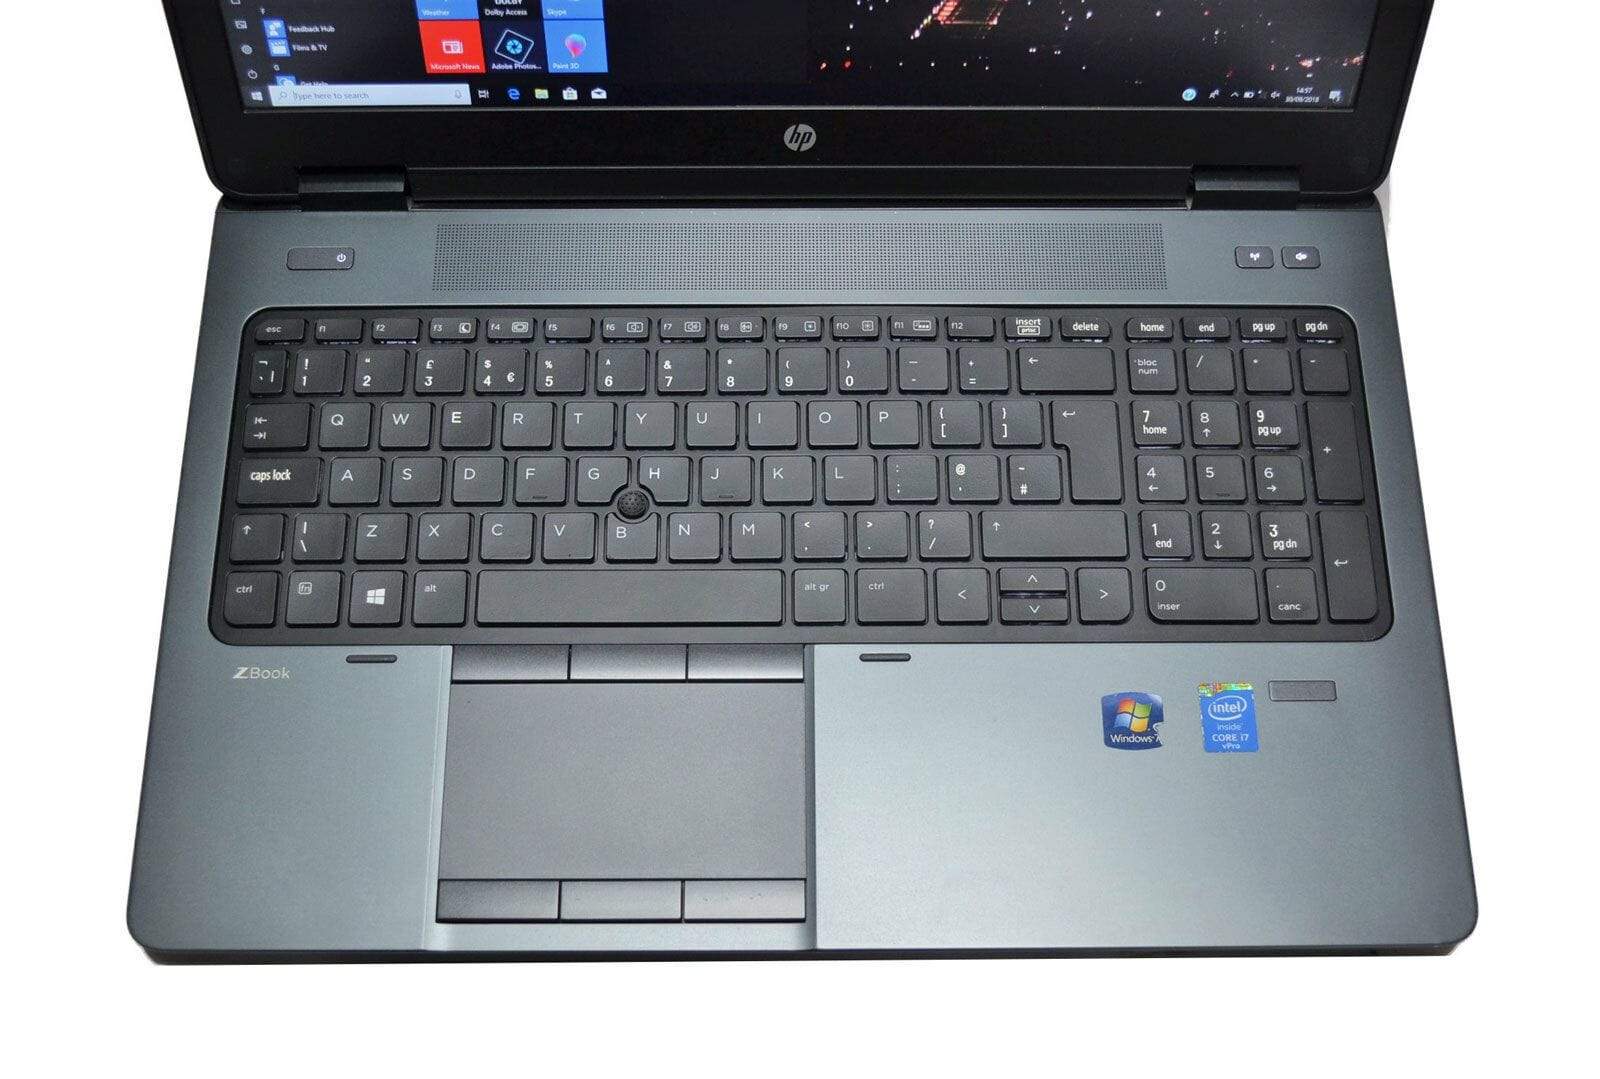 HP ZBook 15 IPS CAD Laptop: 32GB RAM, 480GB SSD, Core i7-4800MQ, Warranty, VAT - CruiseTech